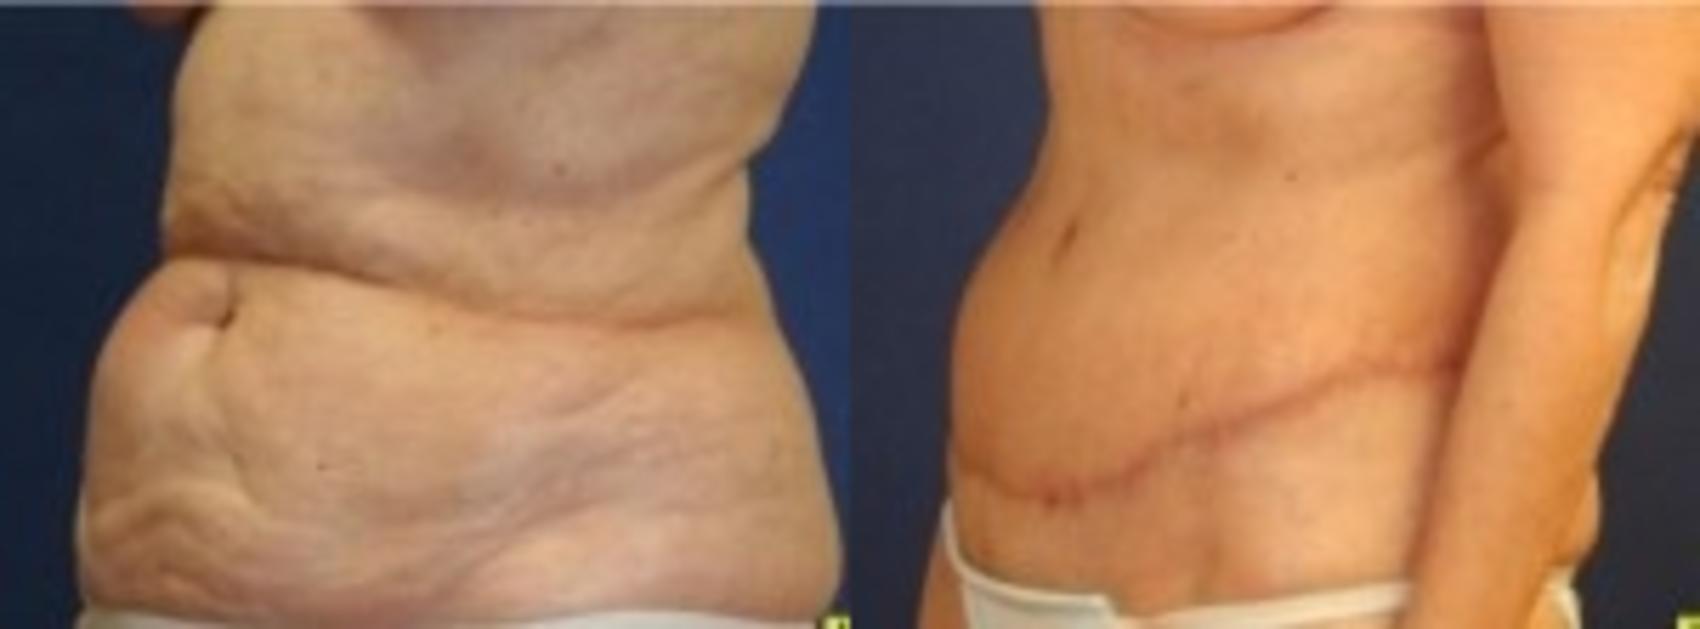 Before & After Liposuction Case 236 Left Oblique View in Ypsilanti, MI